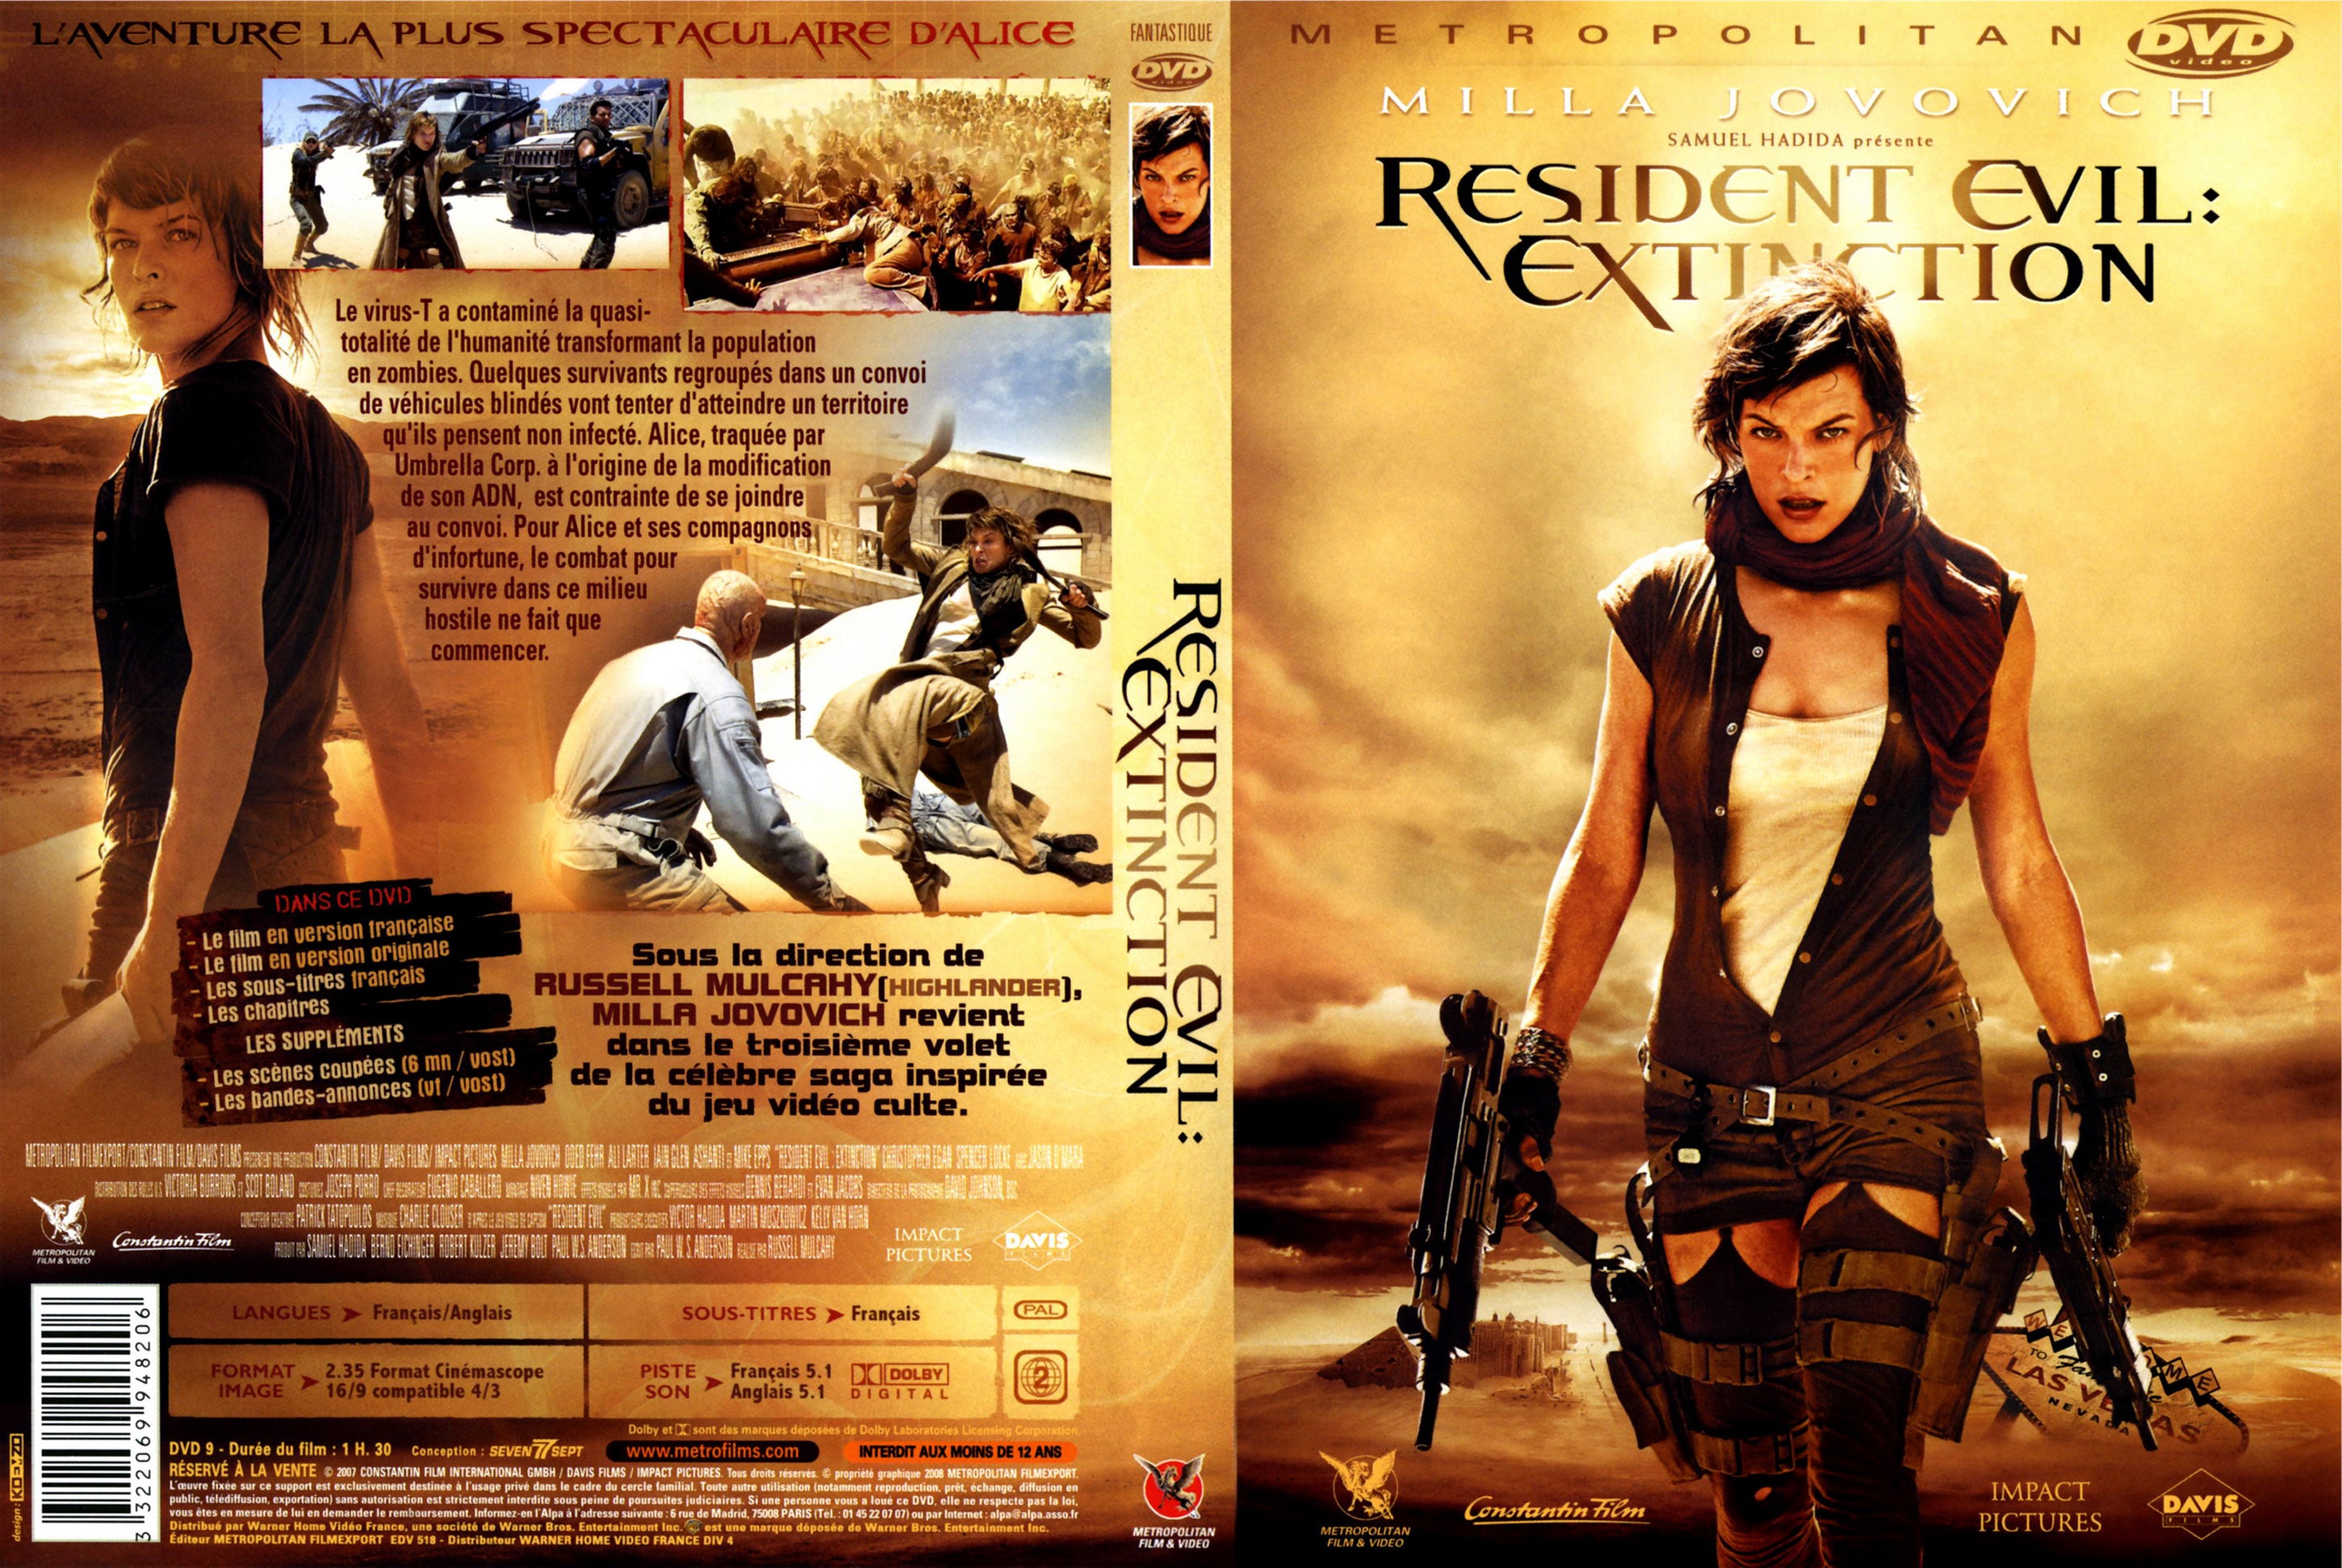 Jaquette DVD Resident evil extinction v2